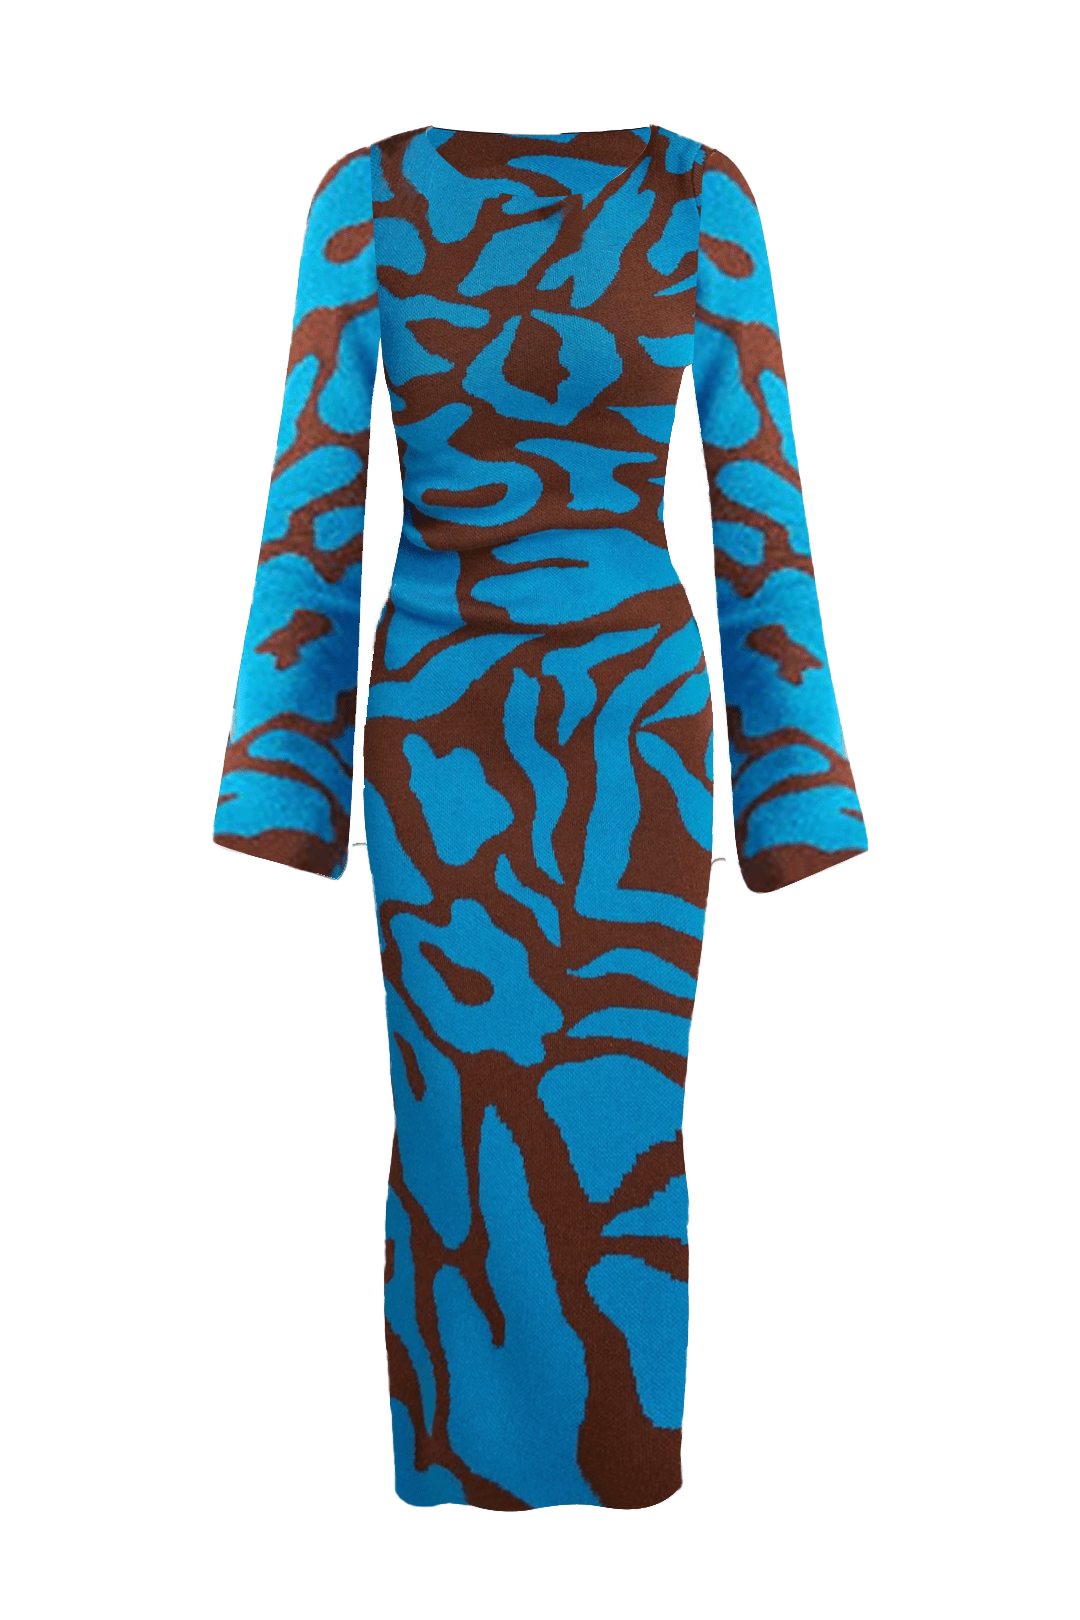 Knitted Blue Bodycon Dress - @theestylishp - Kelly Obi New York